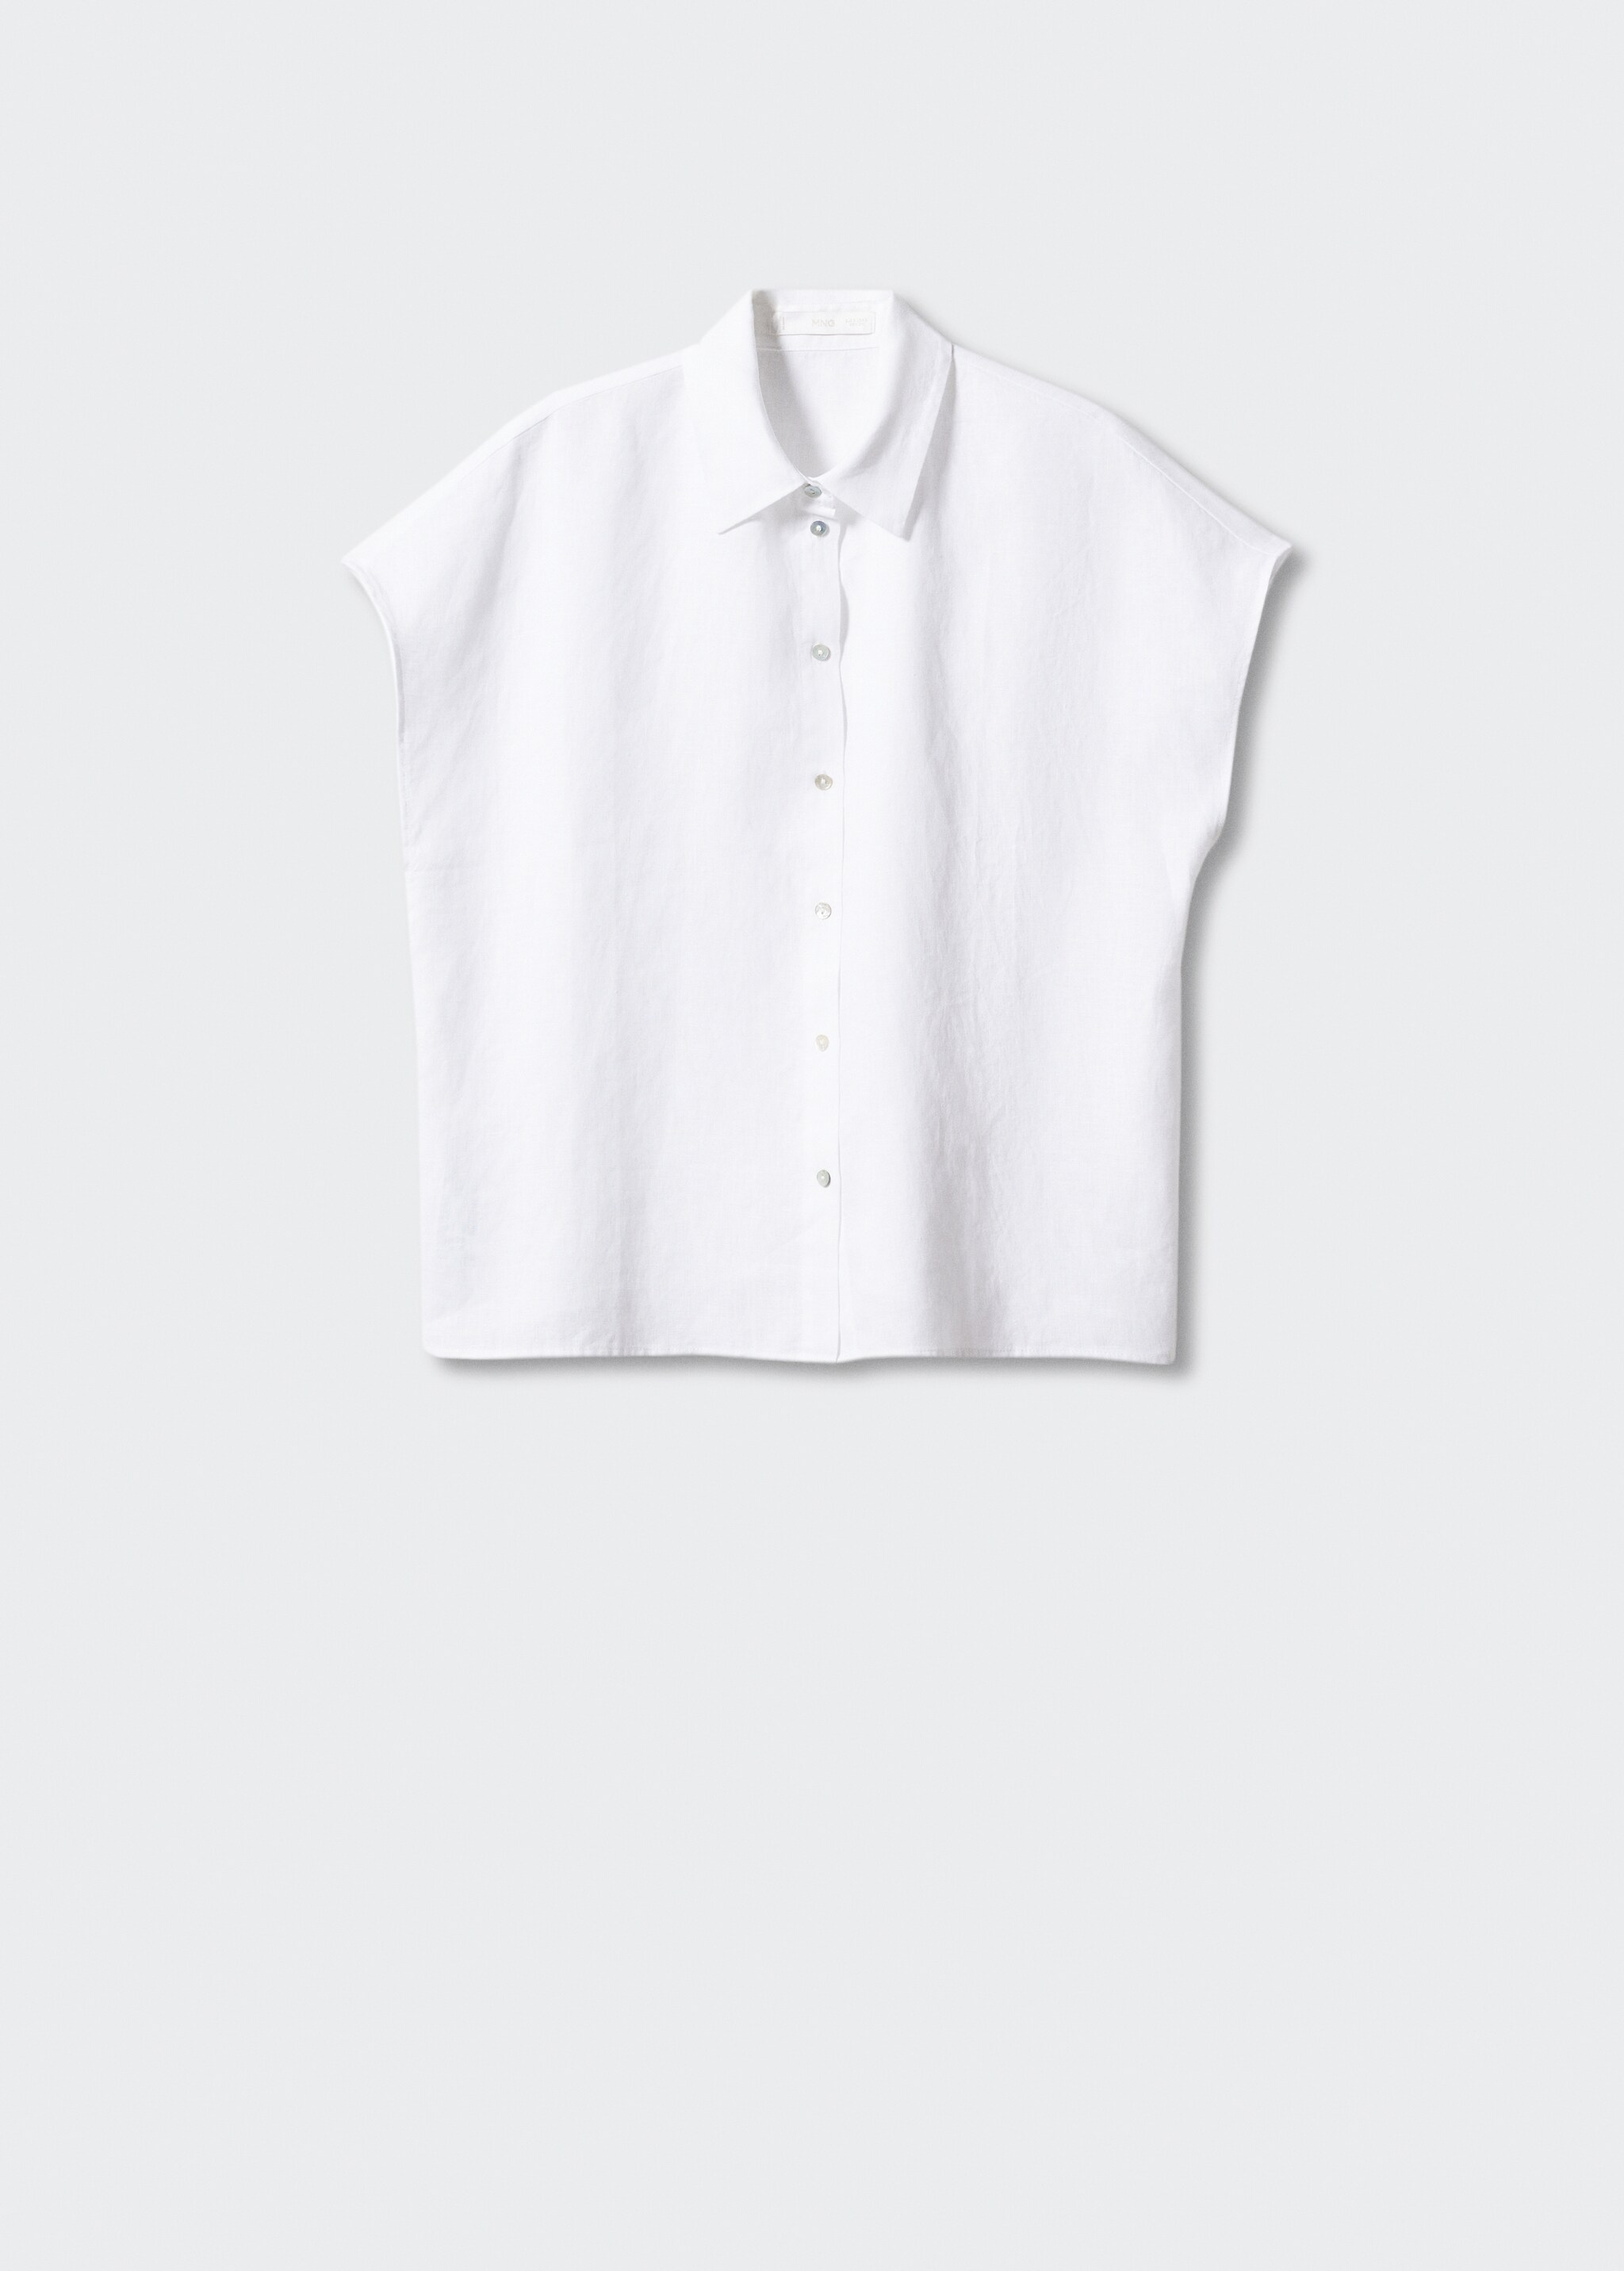 Camisa lino manga corta - Artículo sin modelo